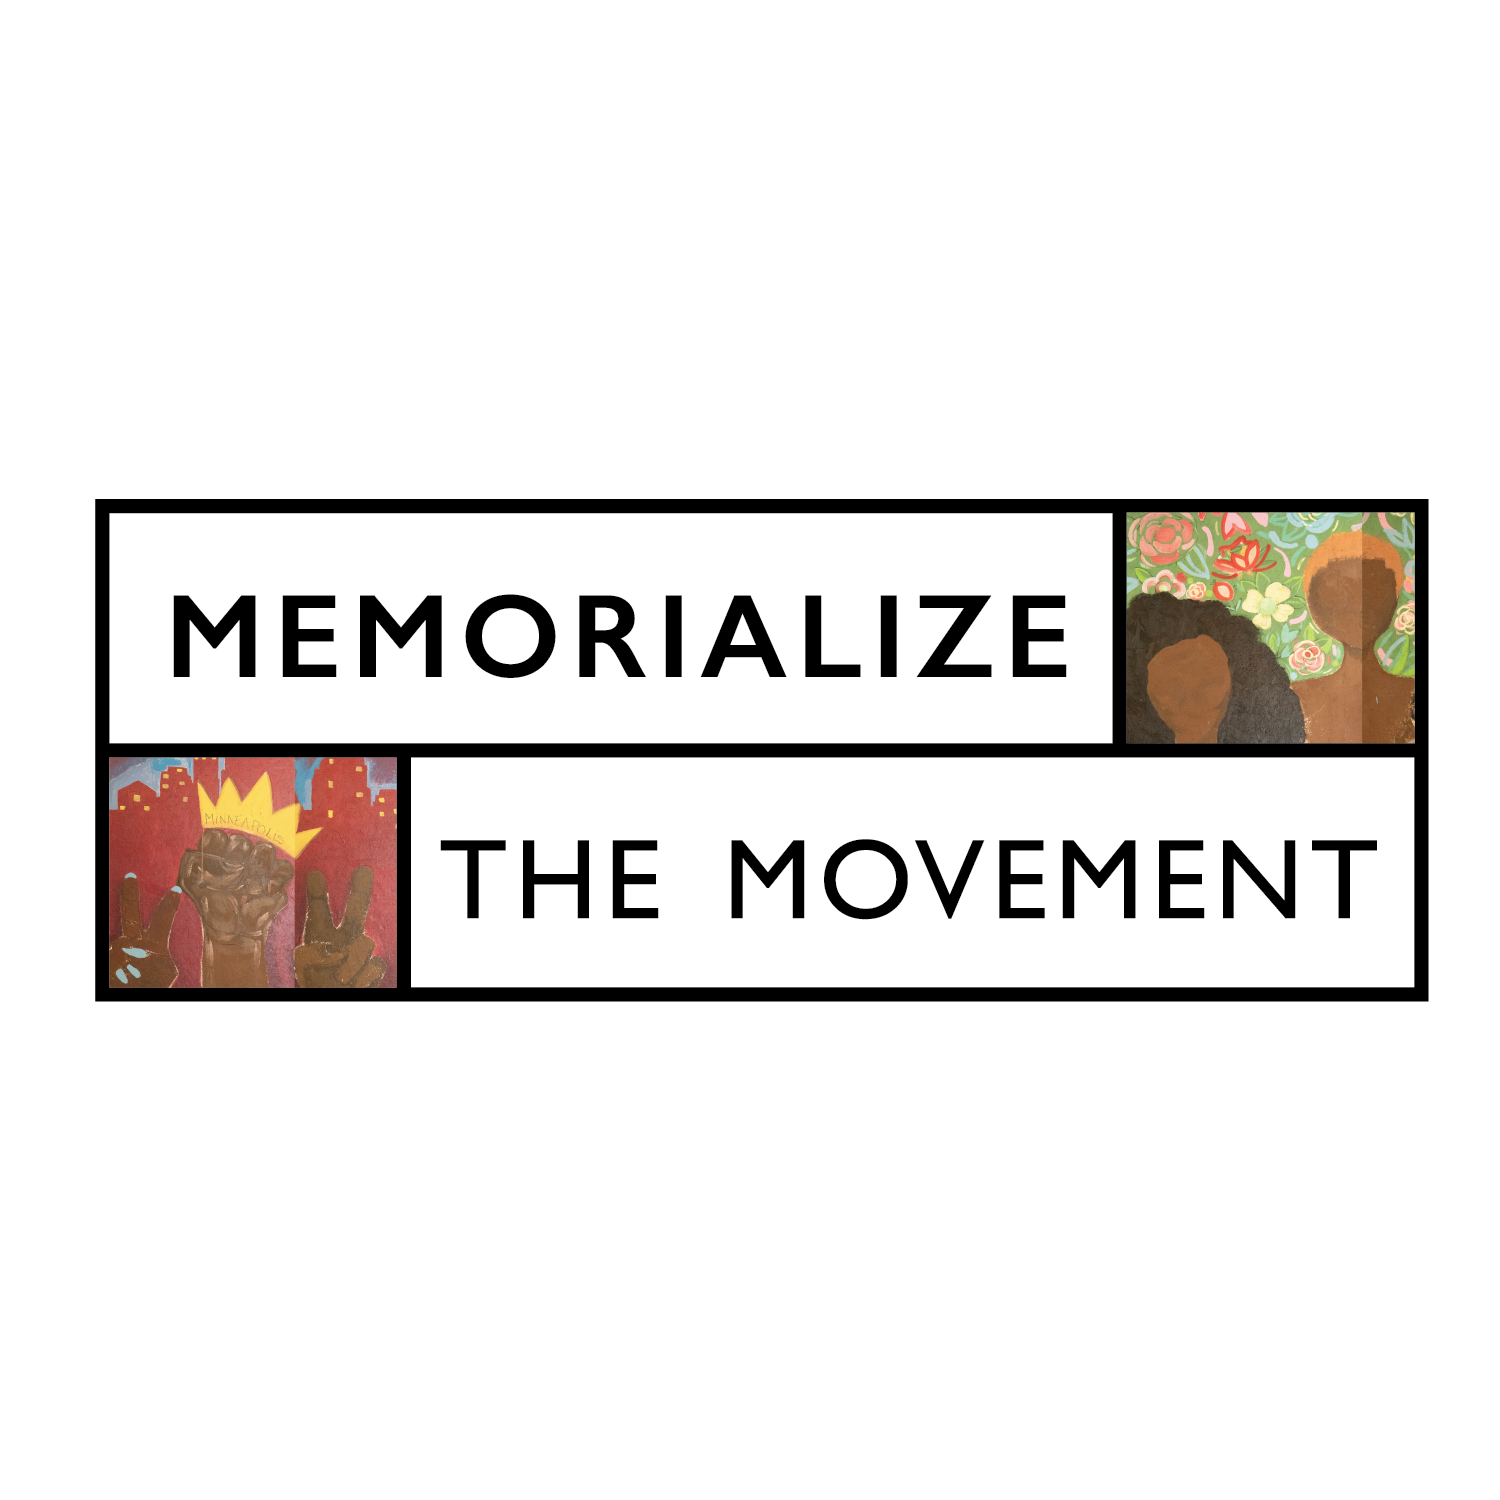 Memorialize the Movement